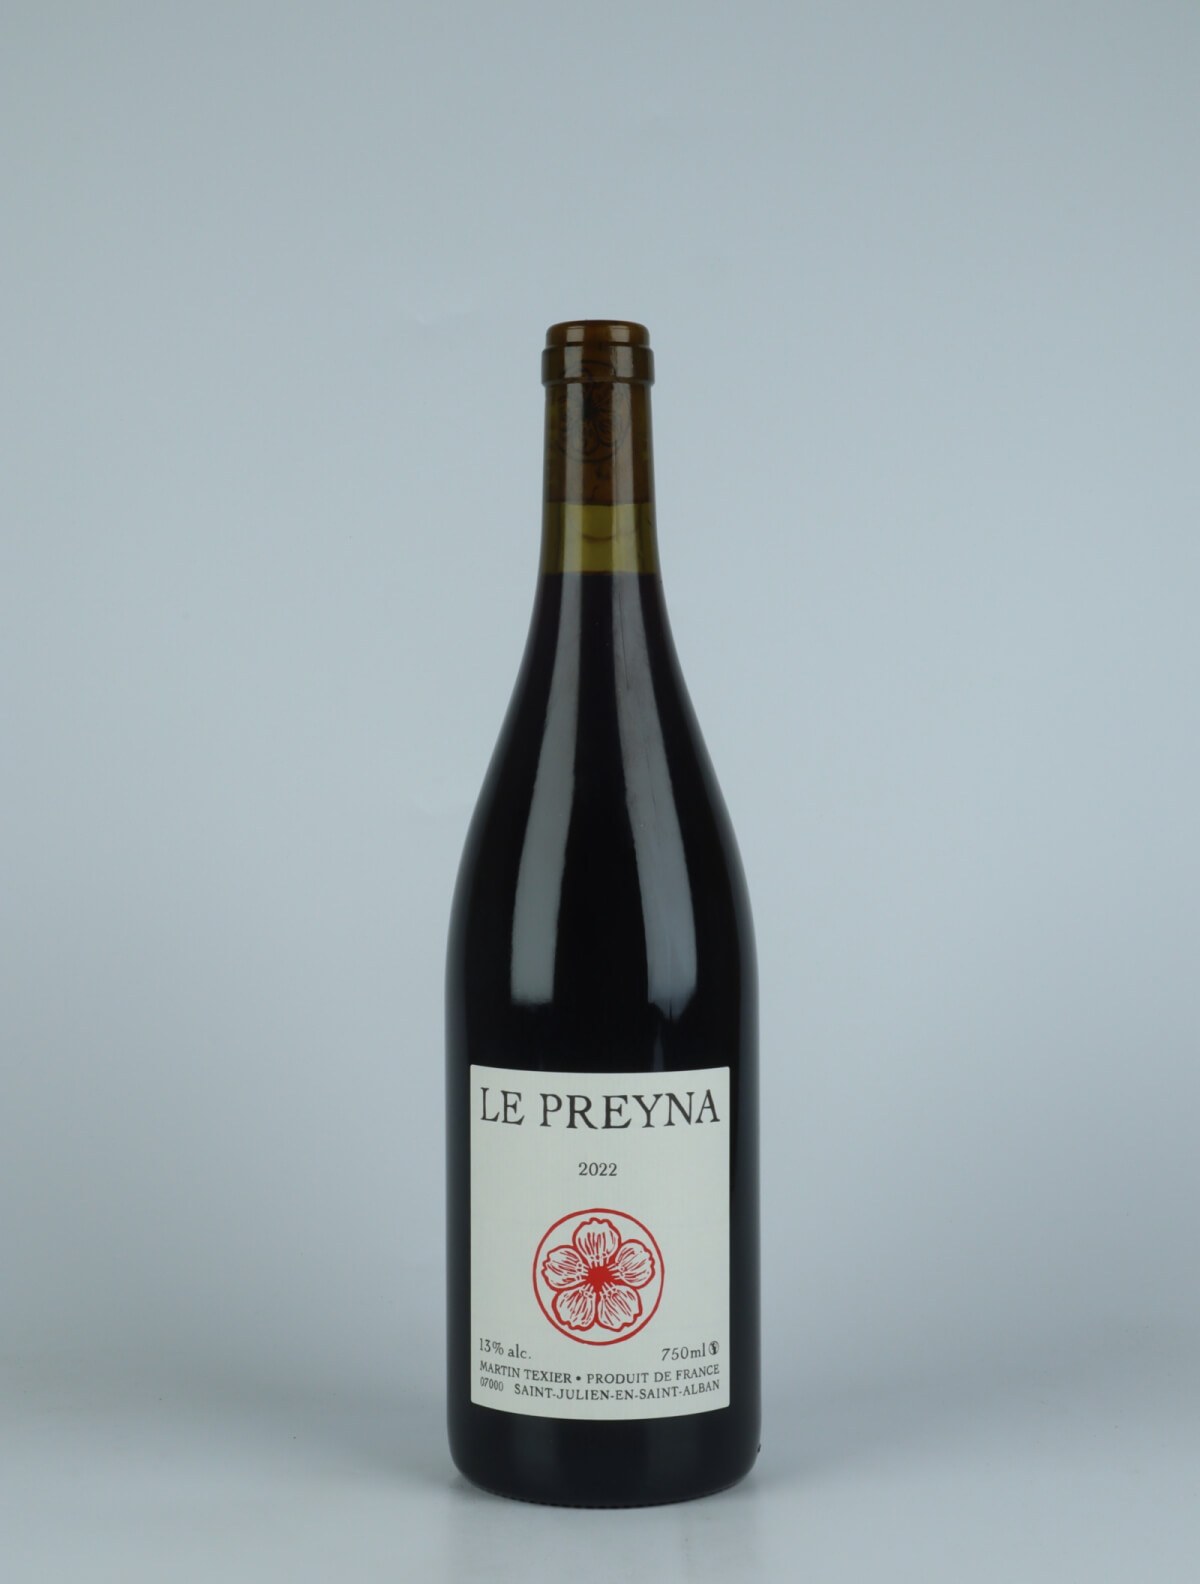 A bottle 2022 Le Preyna Red wine from Martin Texier, Rhône in France